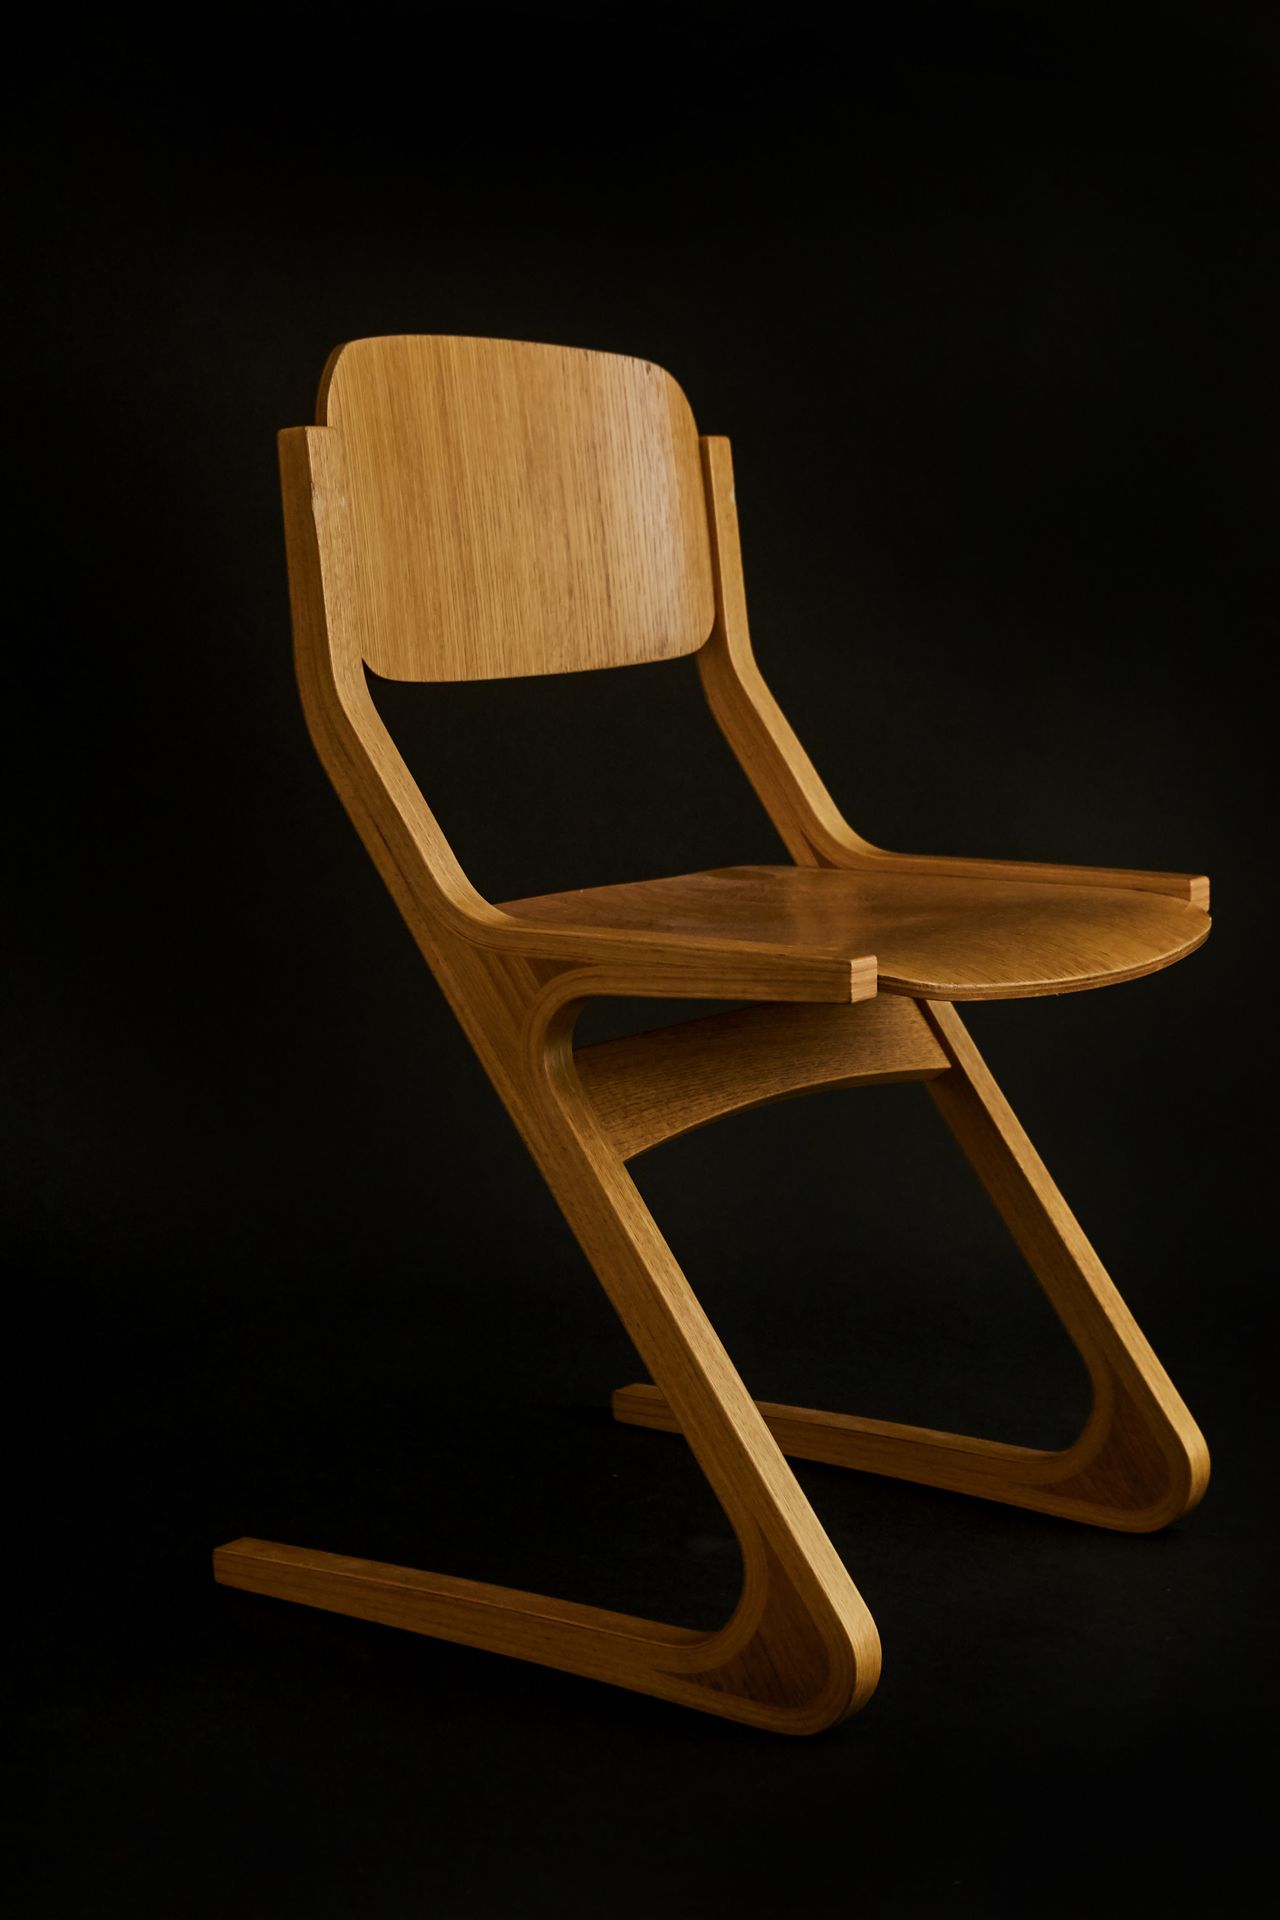 ISAMU KENMOCHI Z chair•••Chaise
Bois 
1960
H 77 L 48 P 50 cm